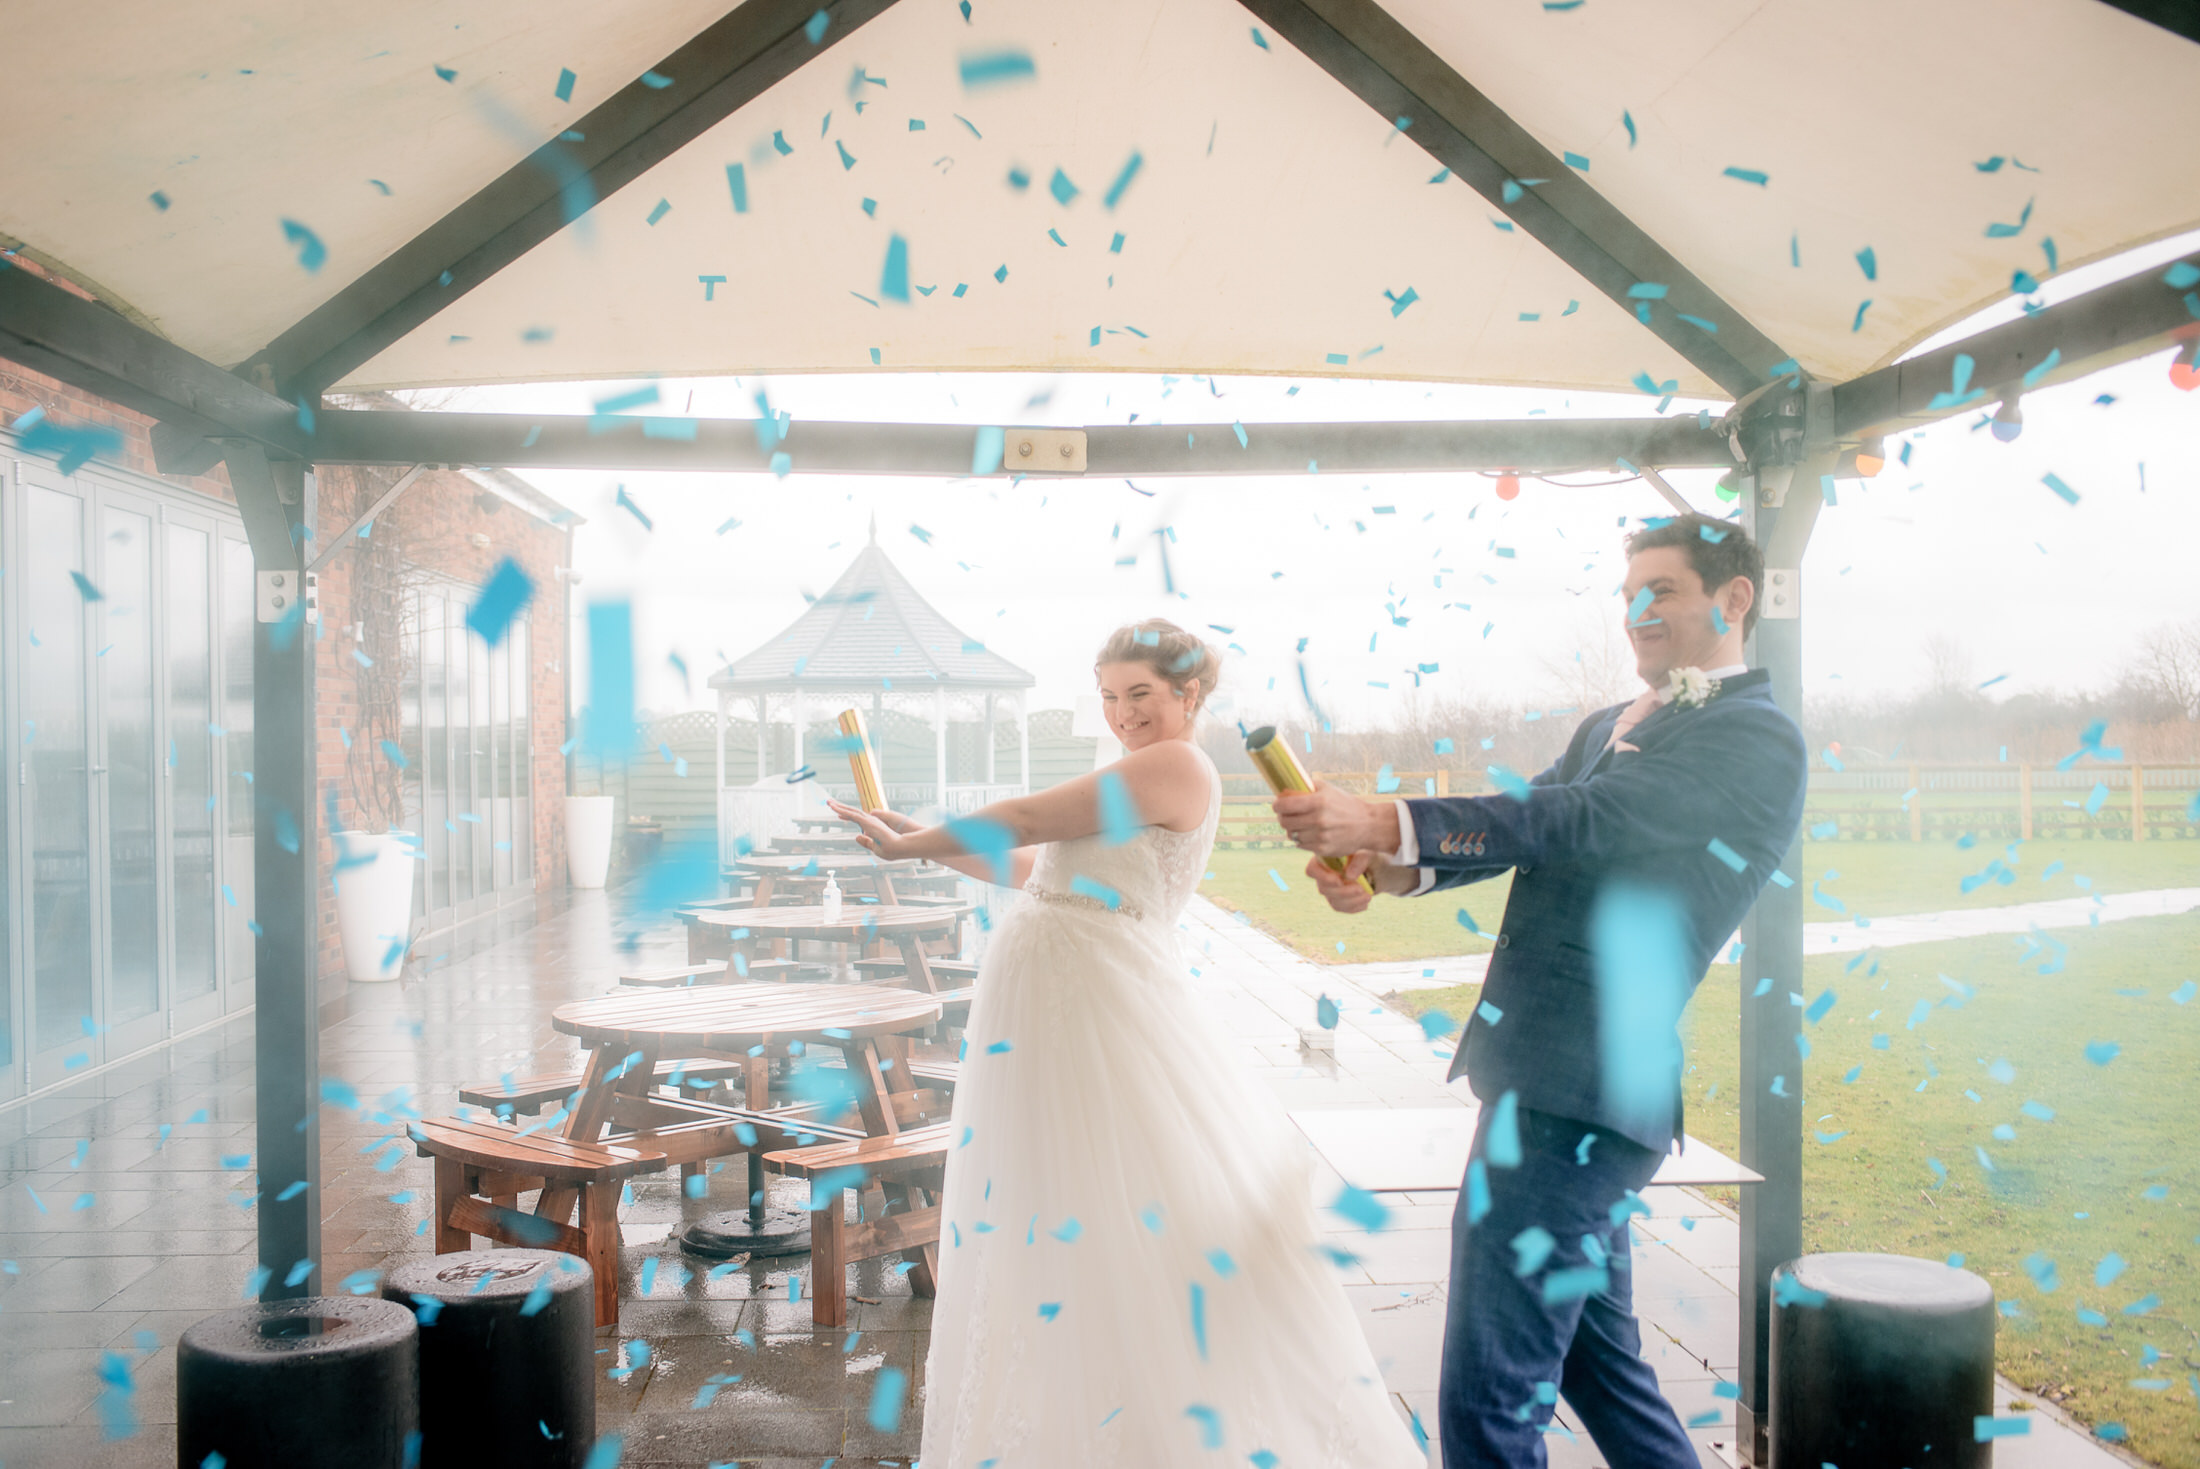 A couple celebrating their wedding at the Brackenborough Hotel, joyfully throwing confetti at each other.